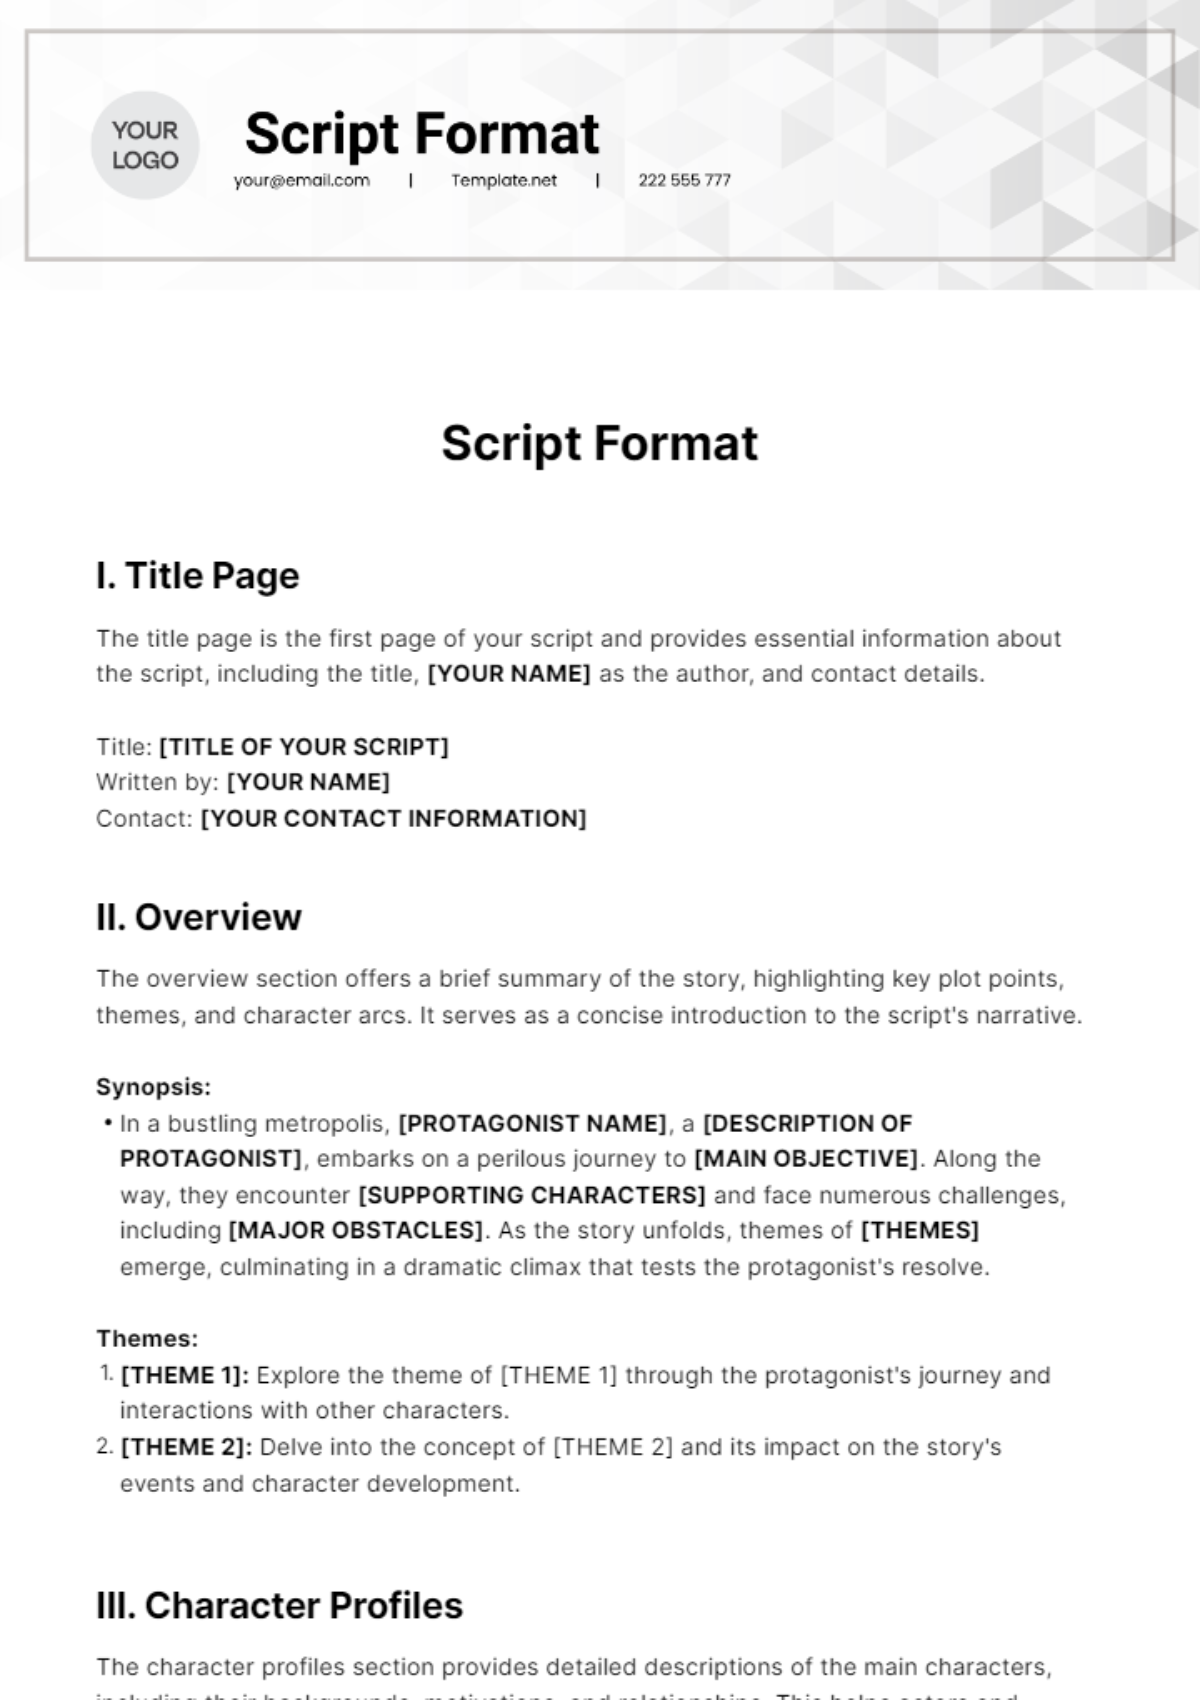 Free Script Format Template